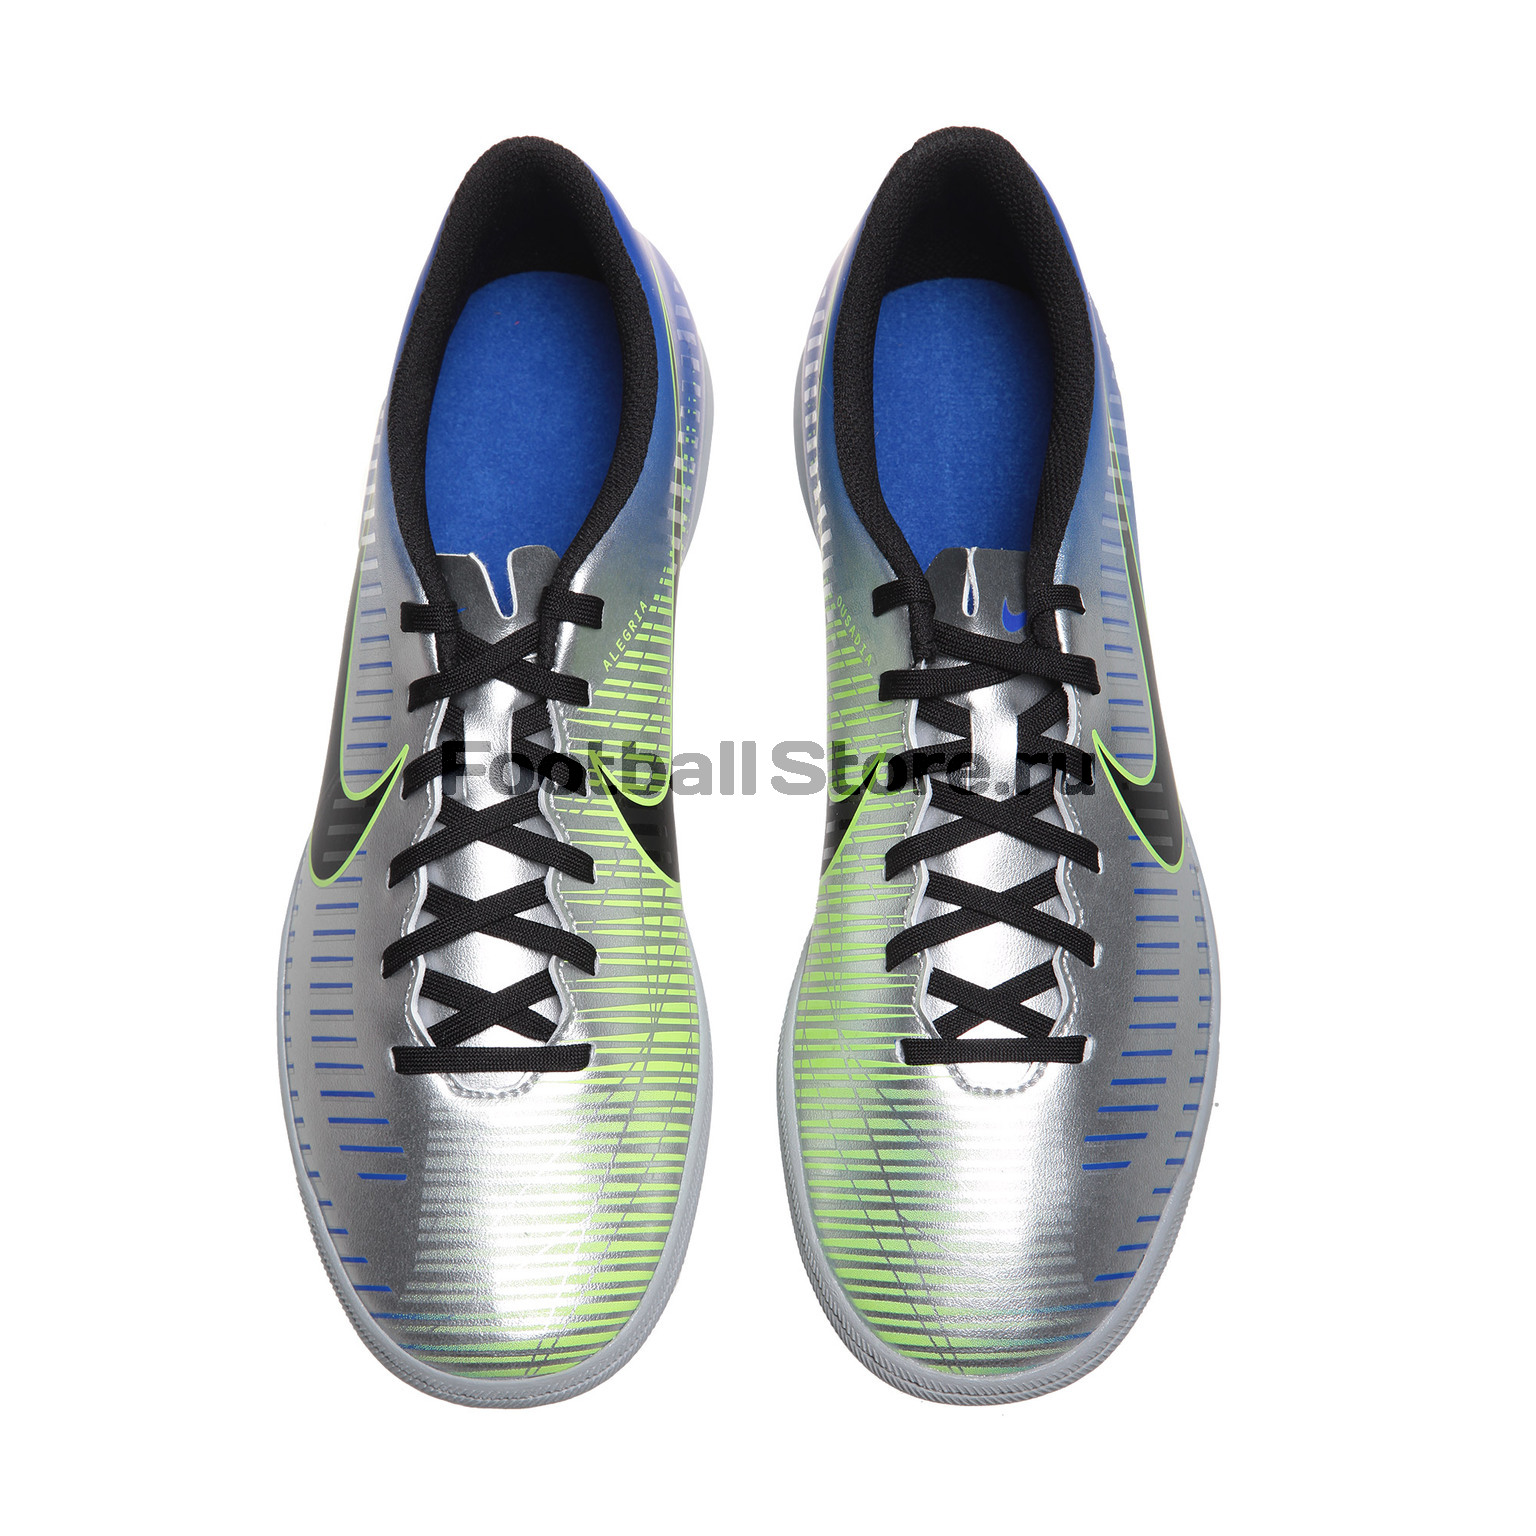 Обувь для зала Nike Mercurial Vortex III Neymar IC 921518-407